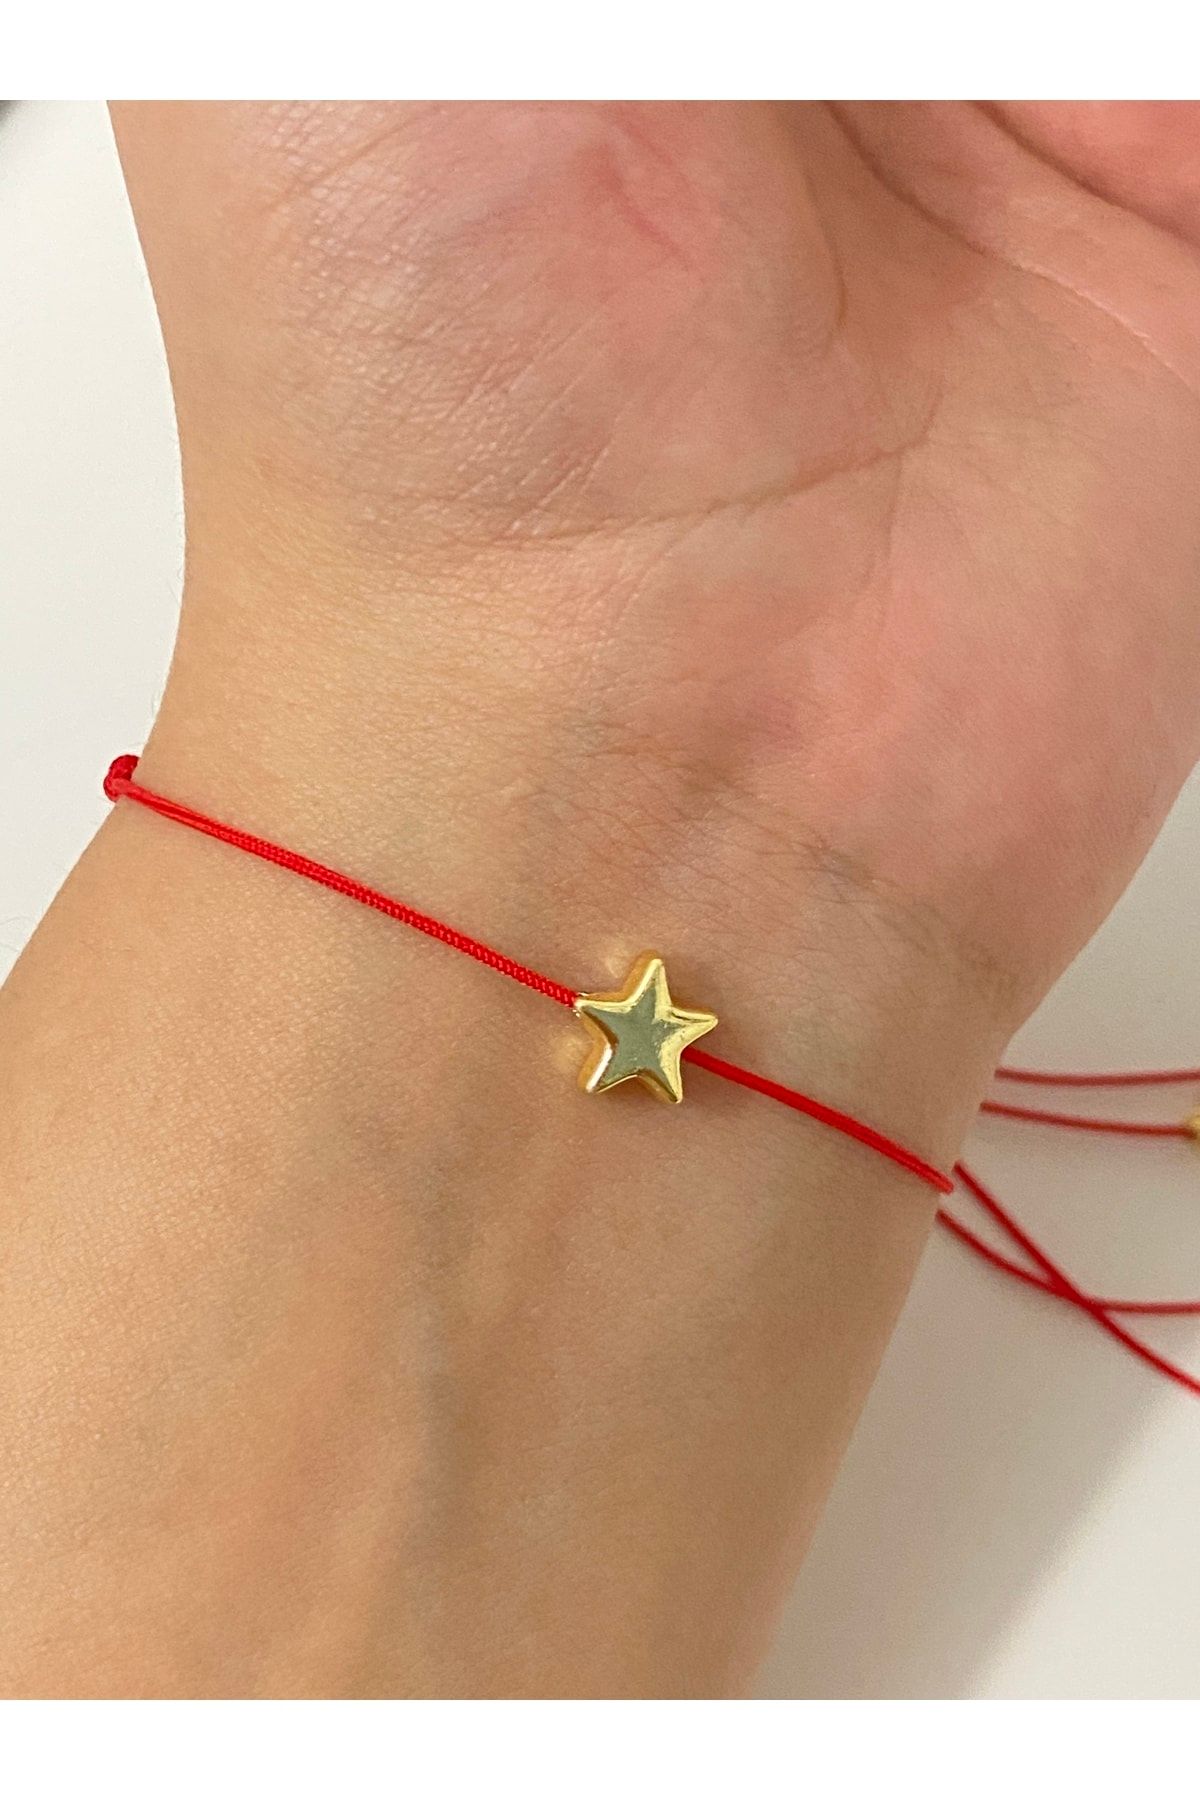 Inseparabile bracelet, star – islafontaine